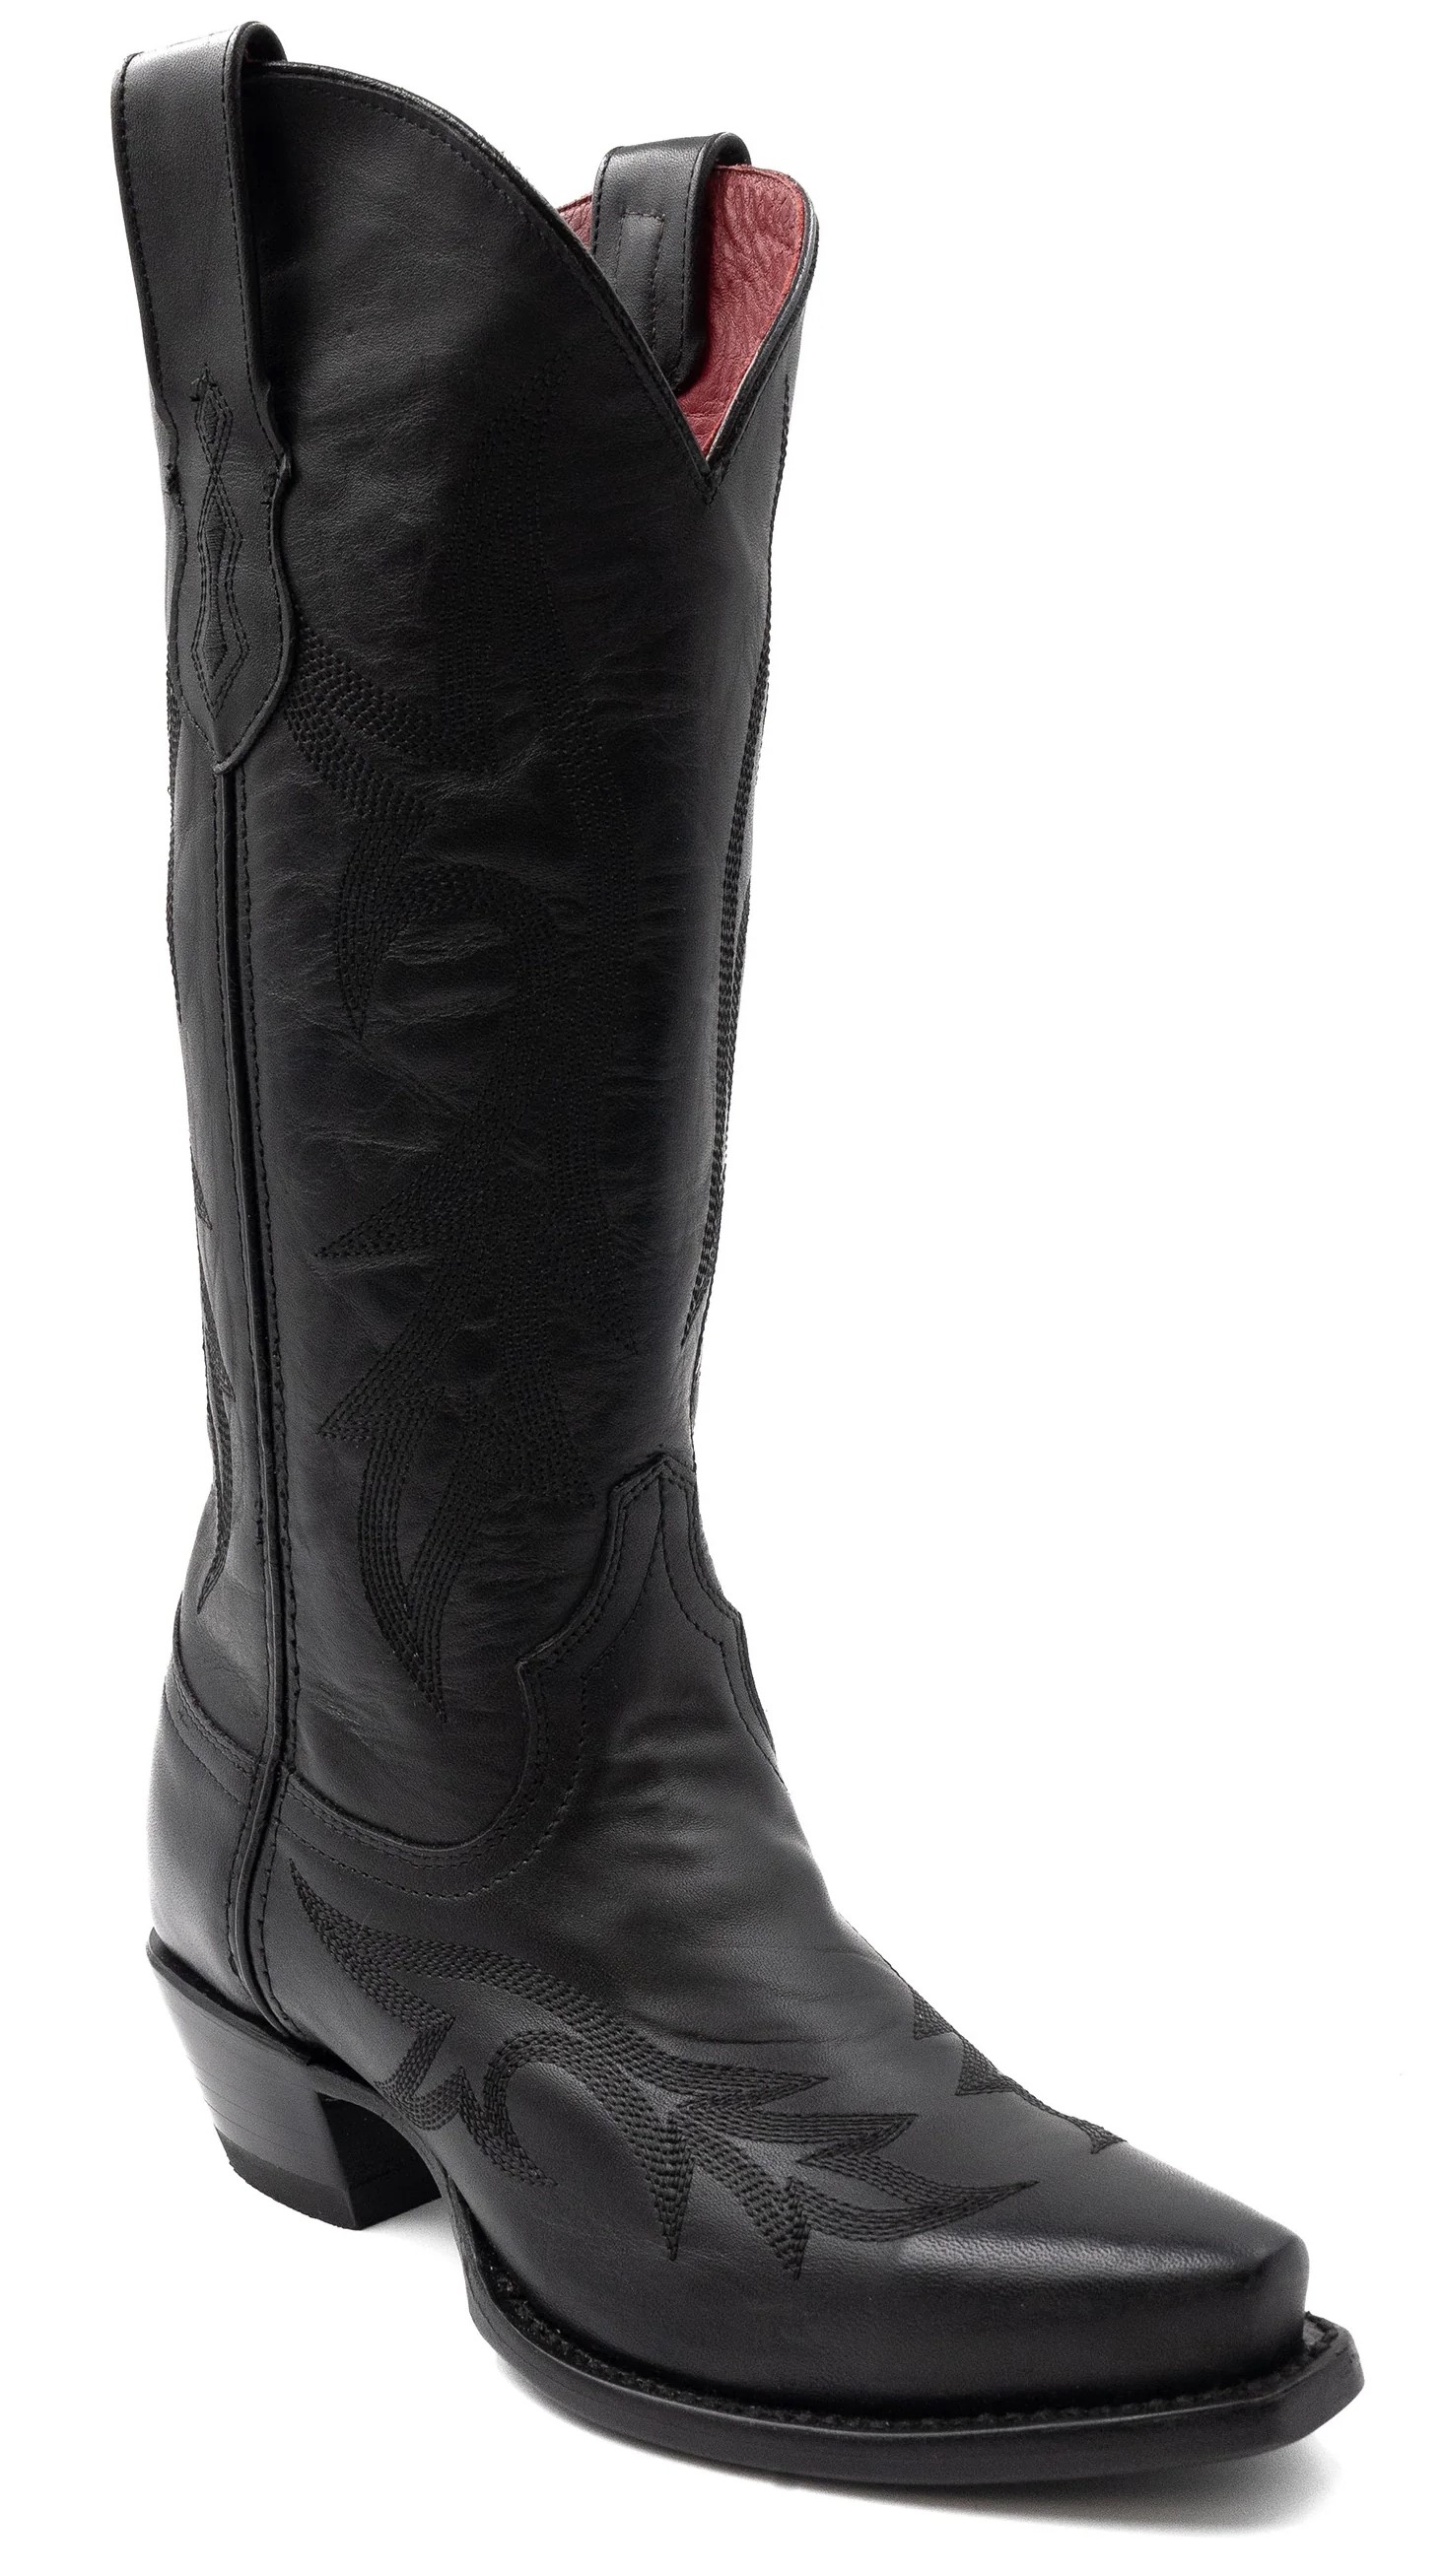 Ferrini Ladies "Scarlett" Black Full Grain Leather Snipped Toe Cowgirl Shoes 84261-04